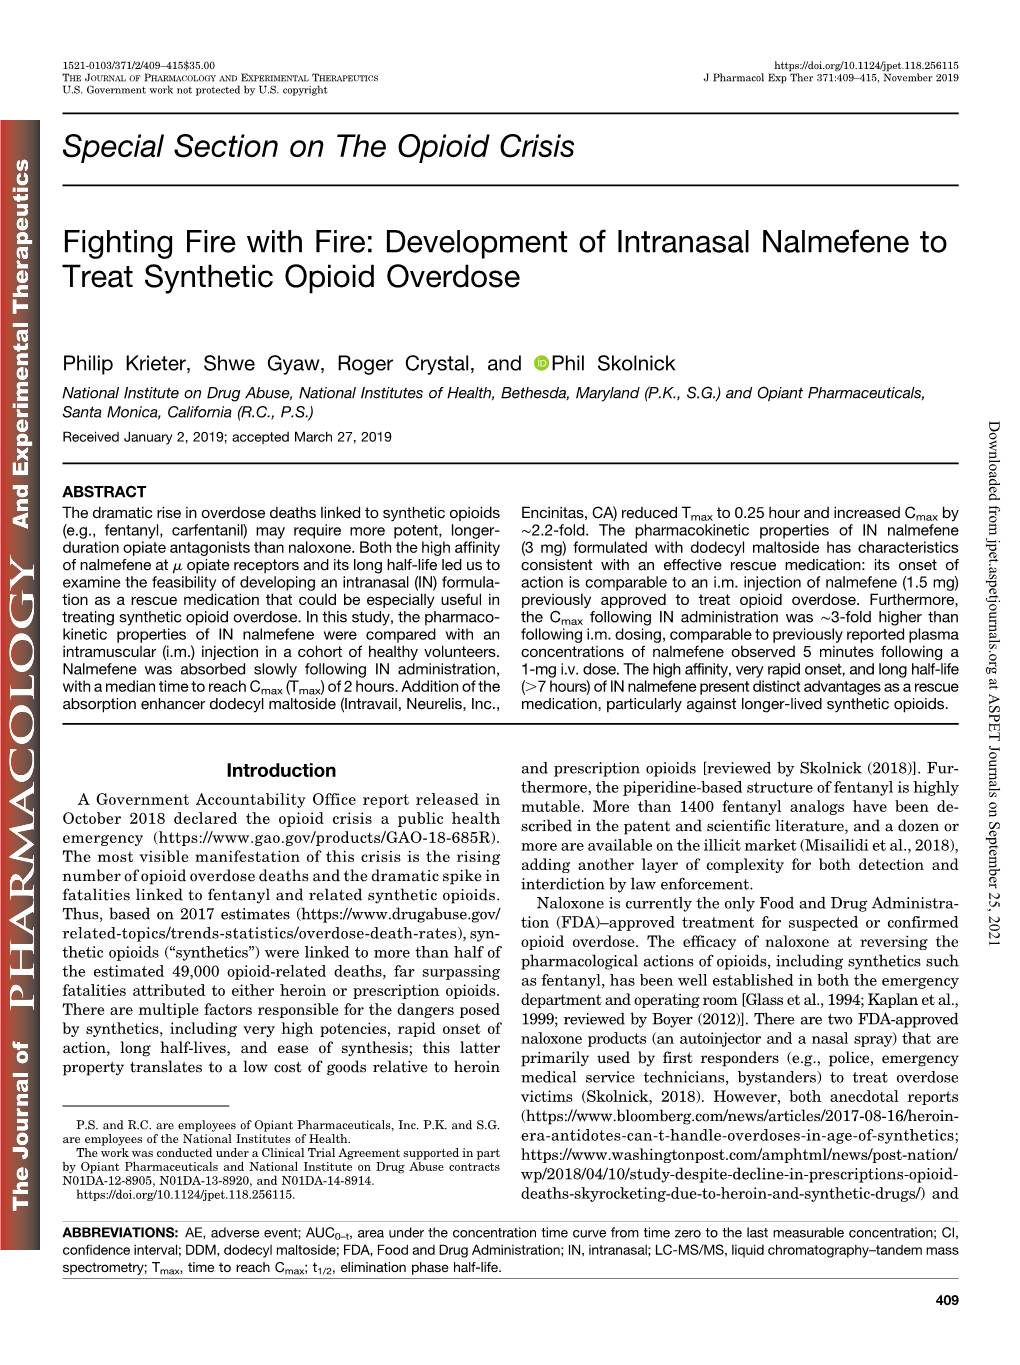 Development of Intranasal Nalmefene to Treat Synthetic Opioid Overdose